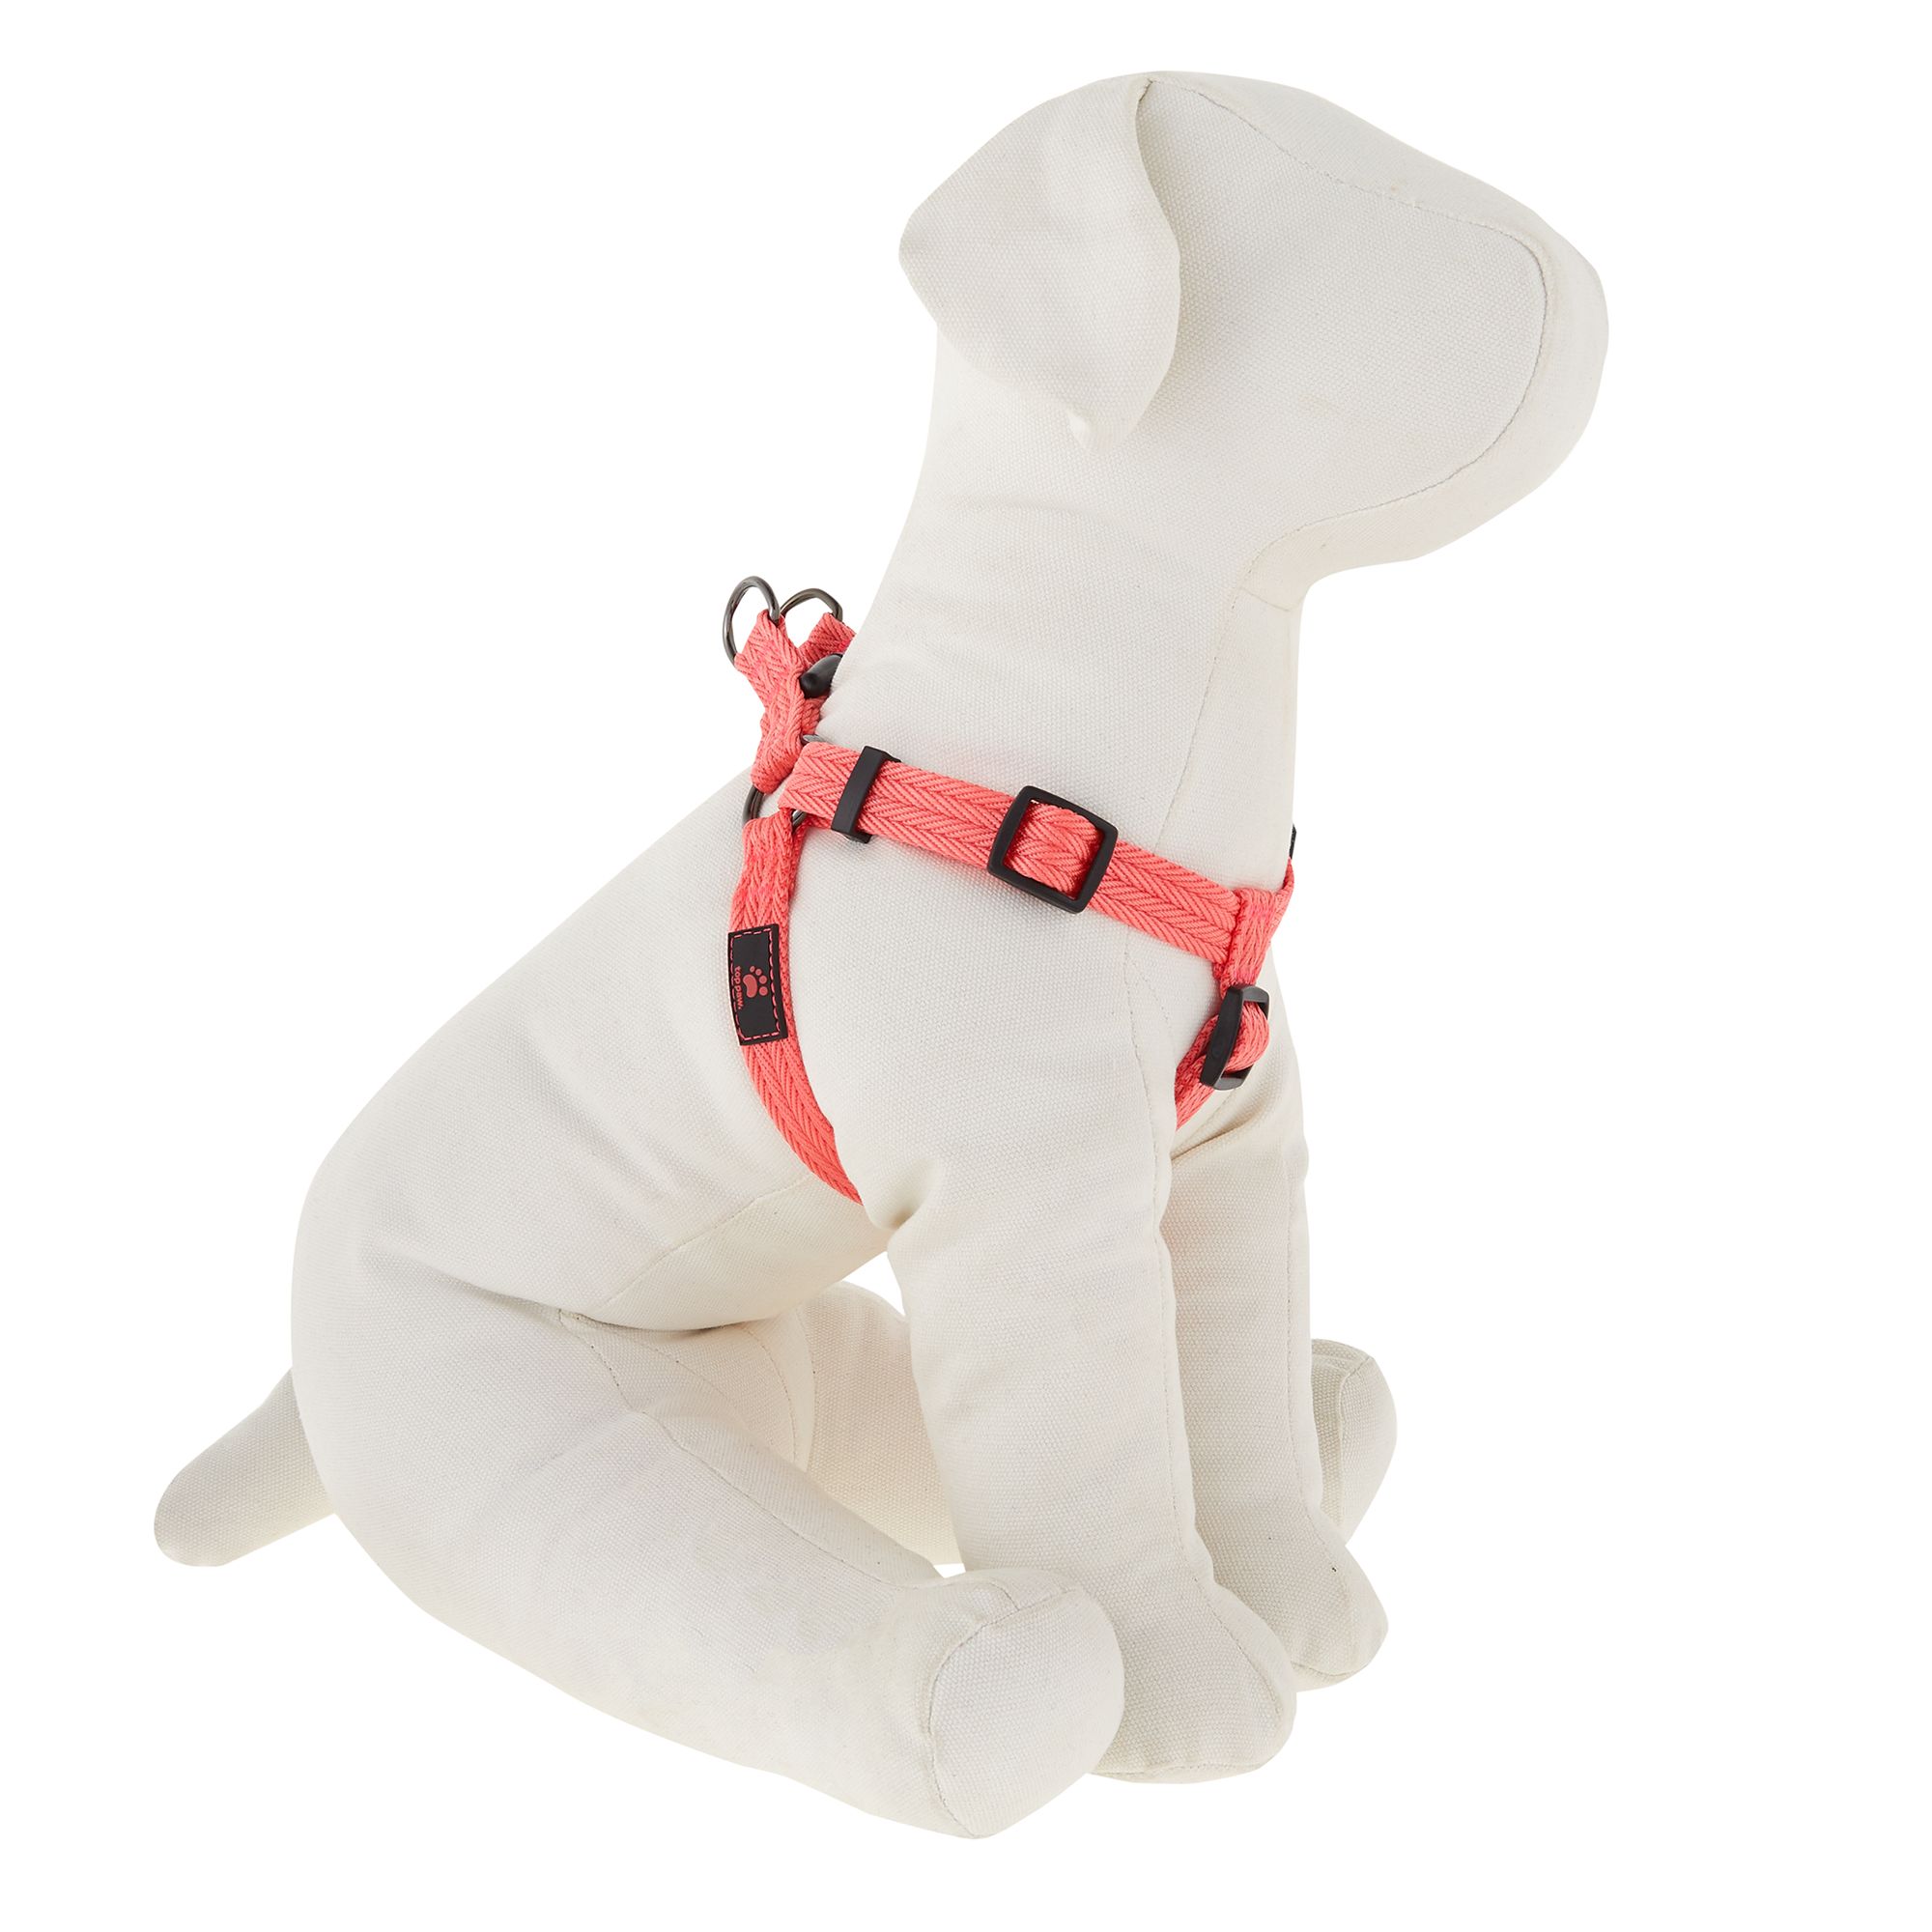 fully adjustable dog harness